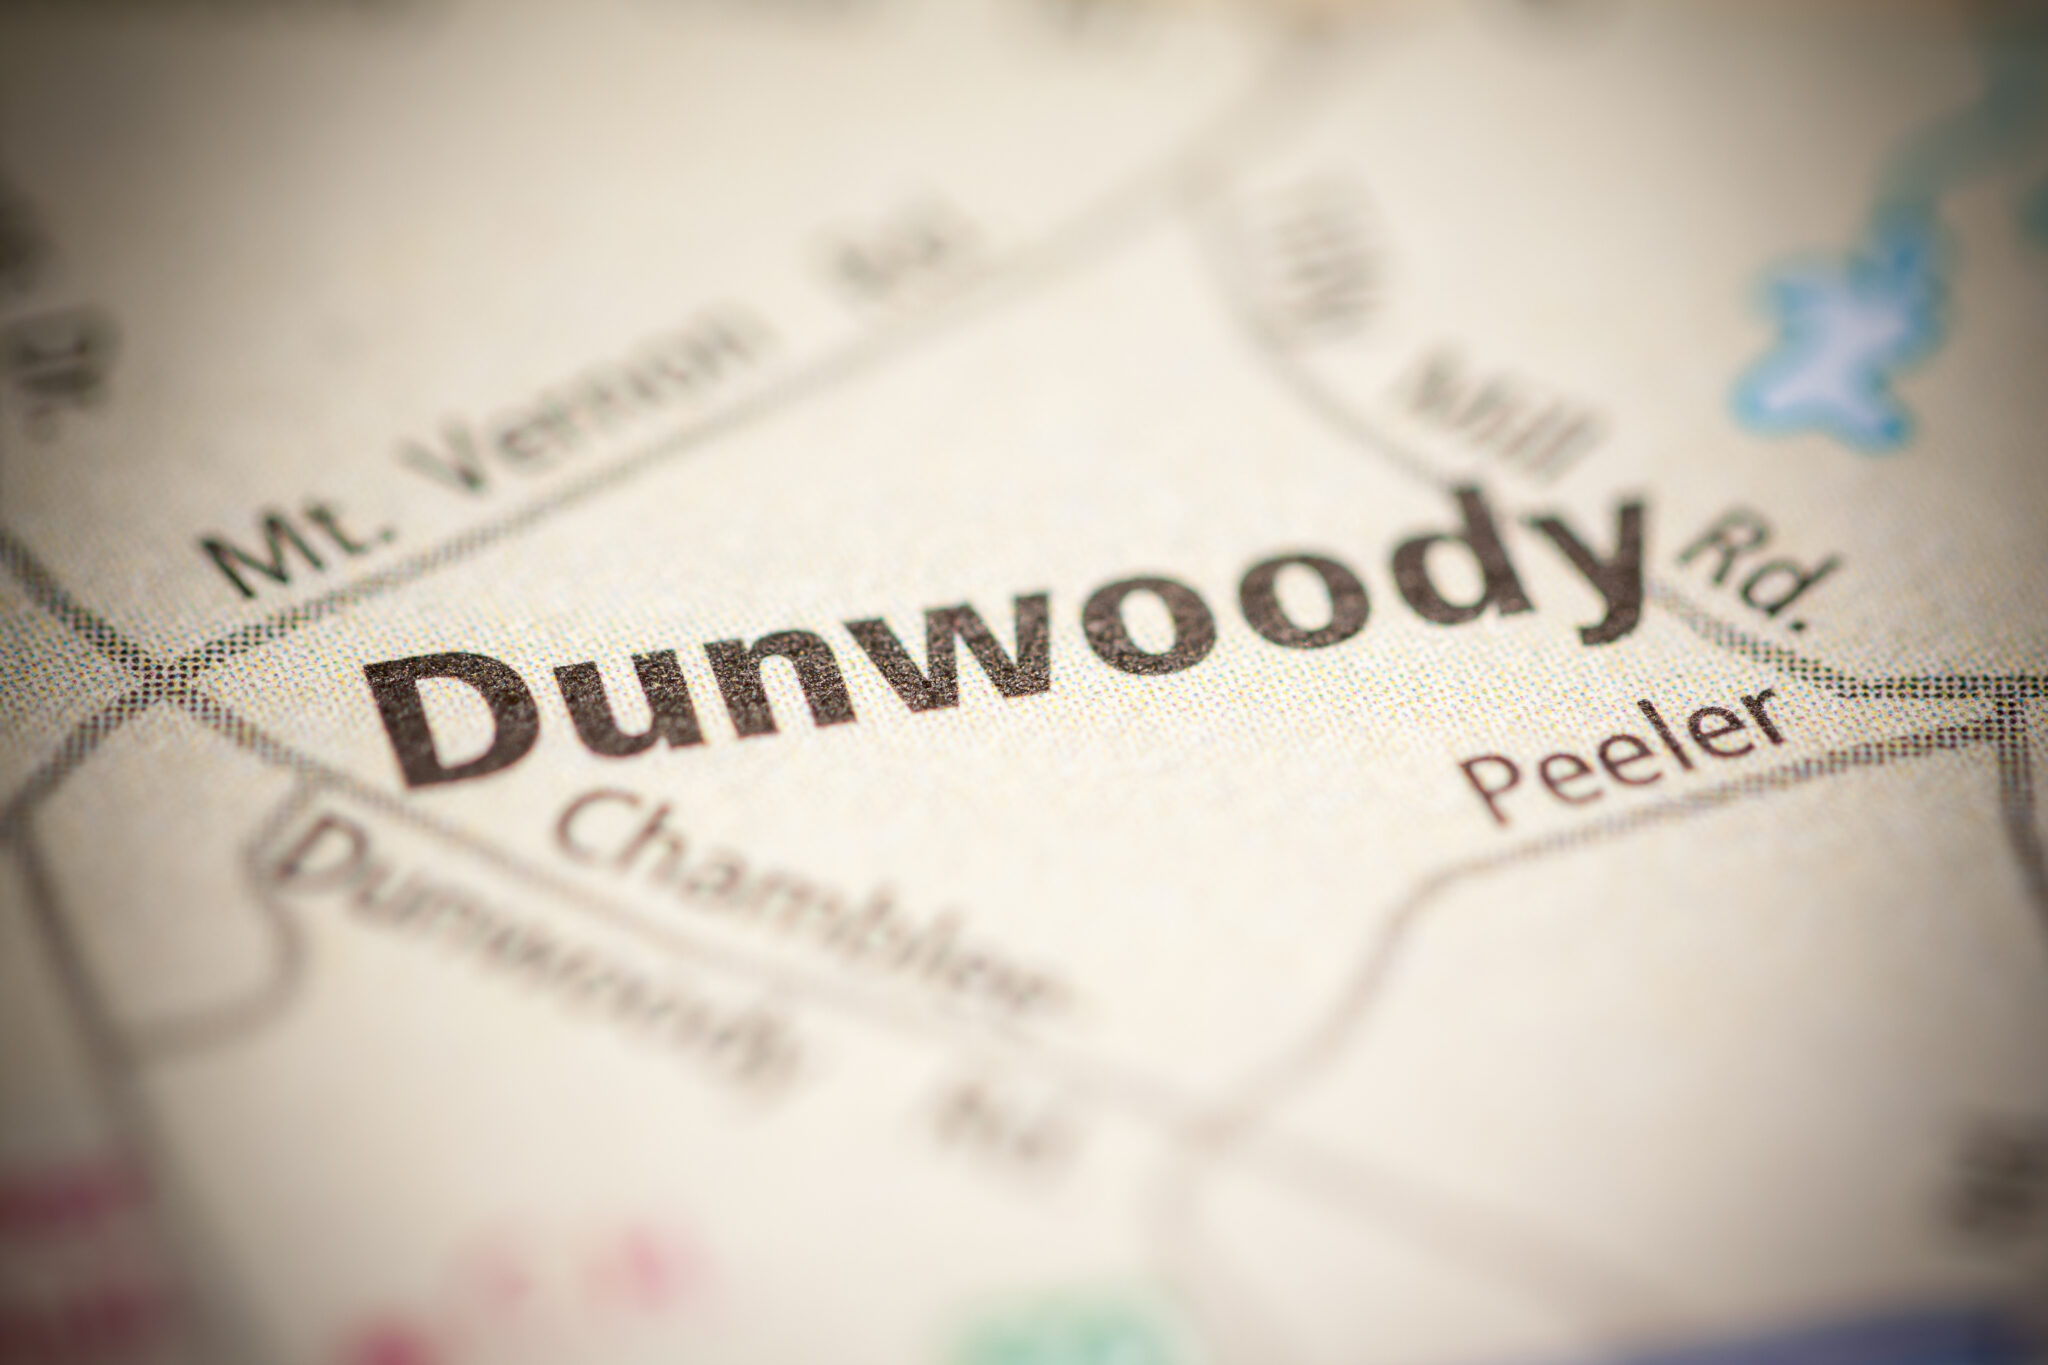 Dunwoody. Georgia. USA on the map